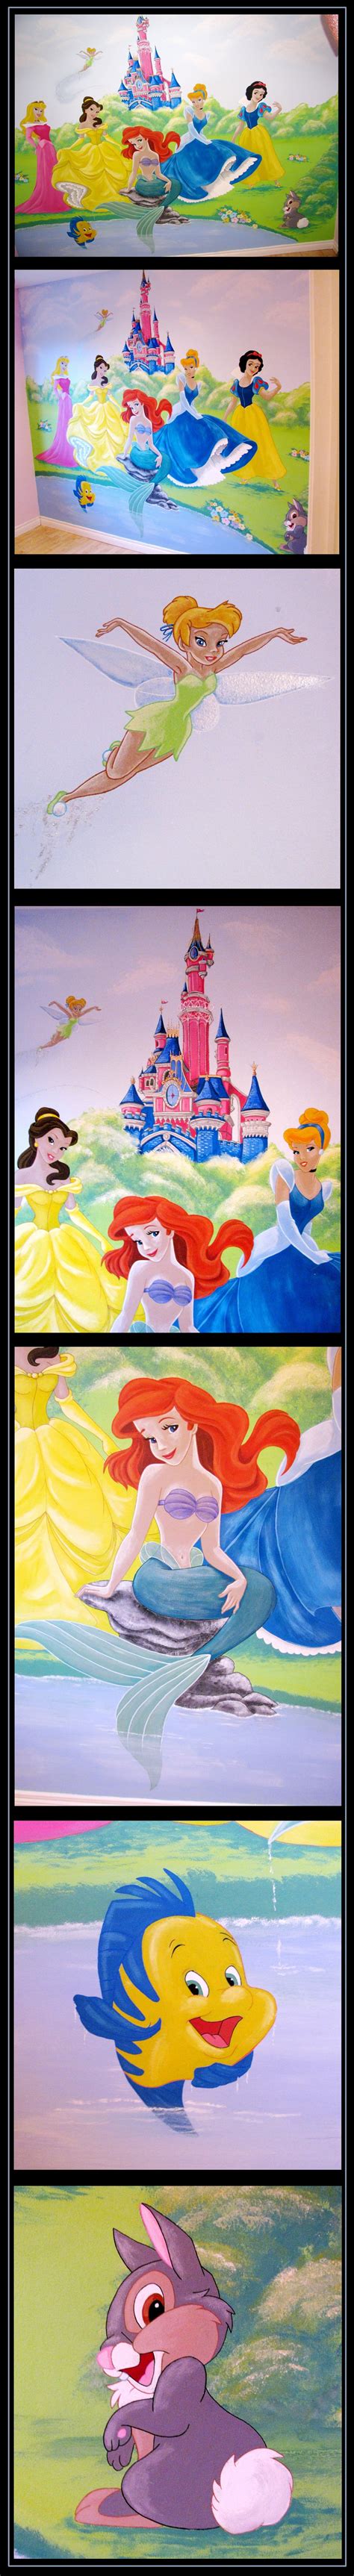 Disney Princess Mural On